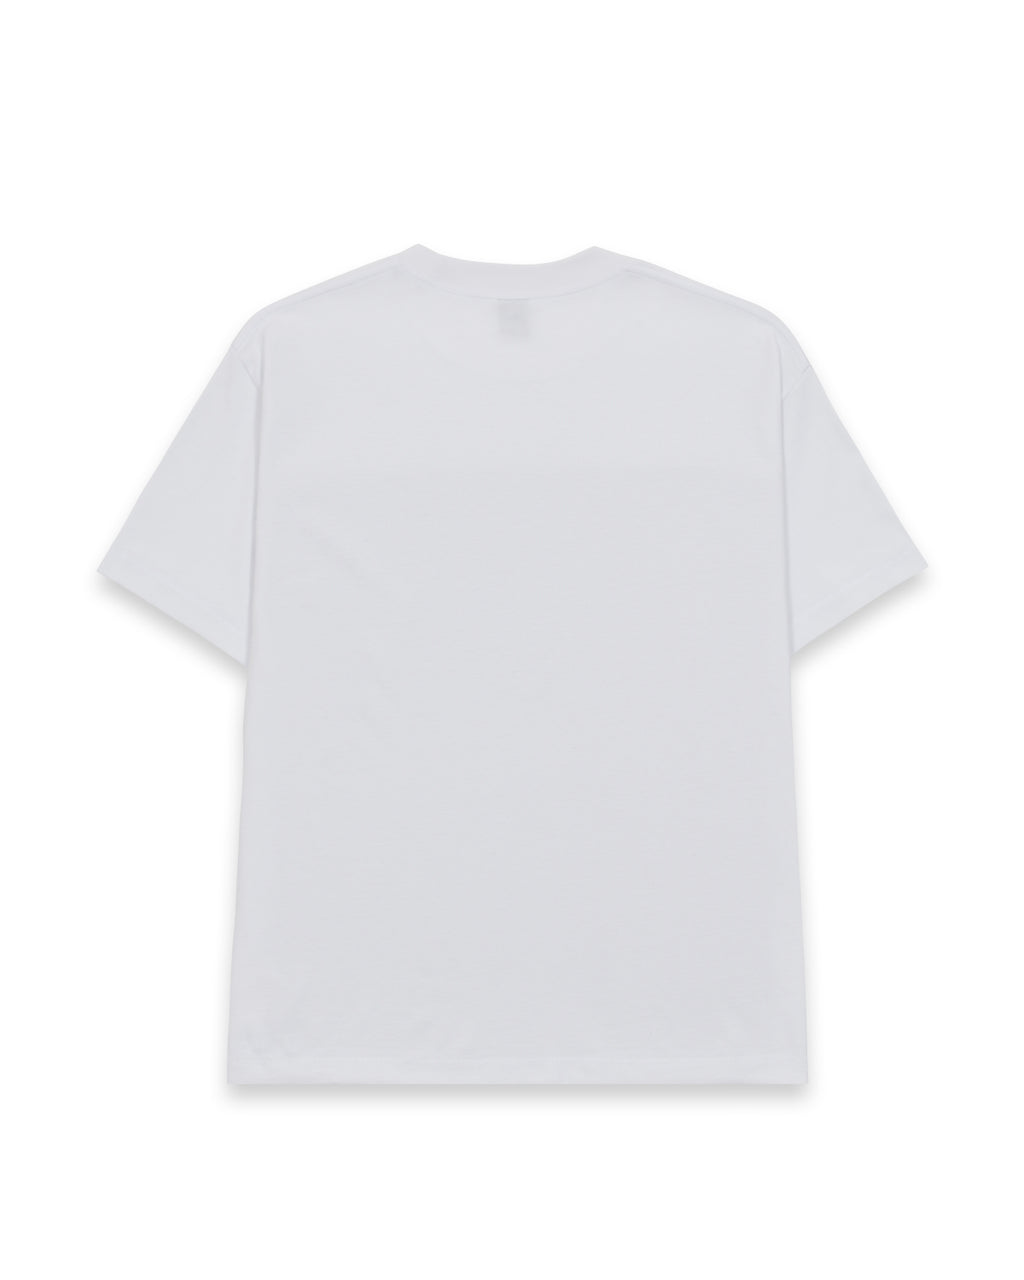 Easy Shirt - White 2